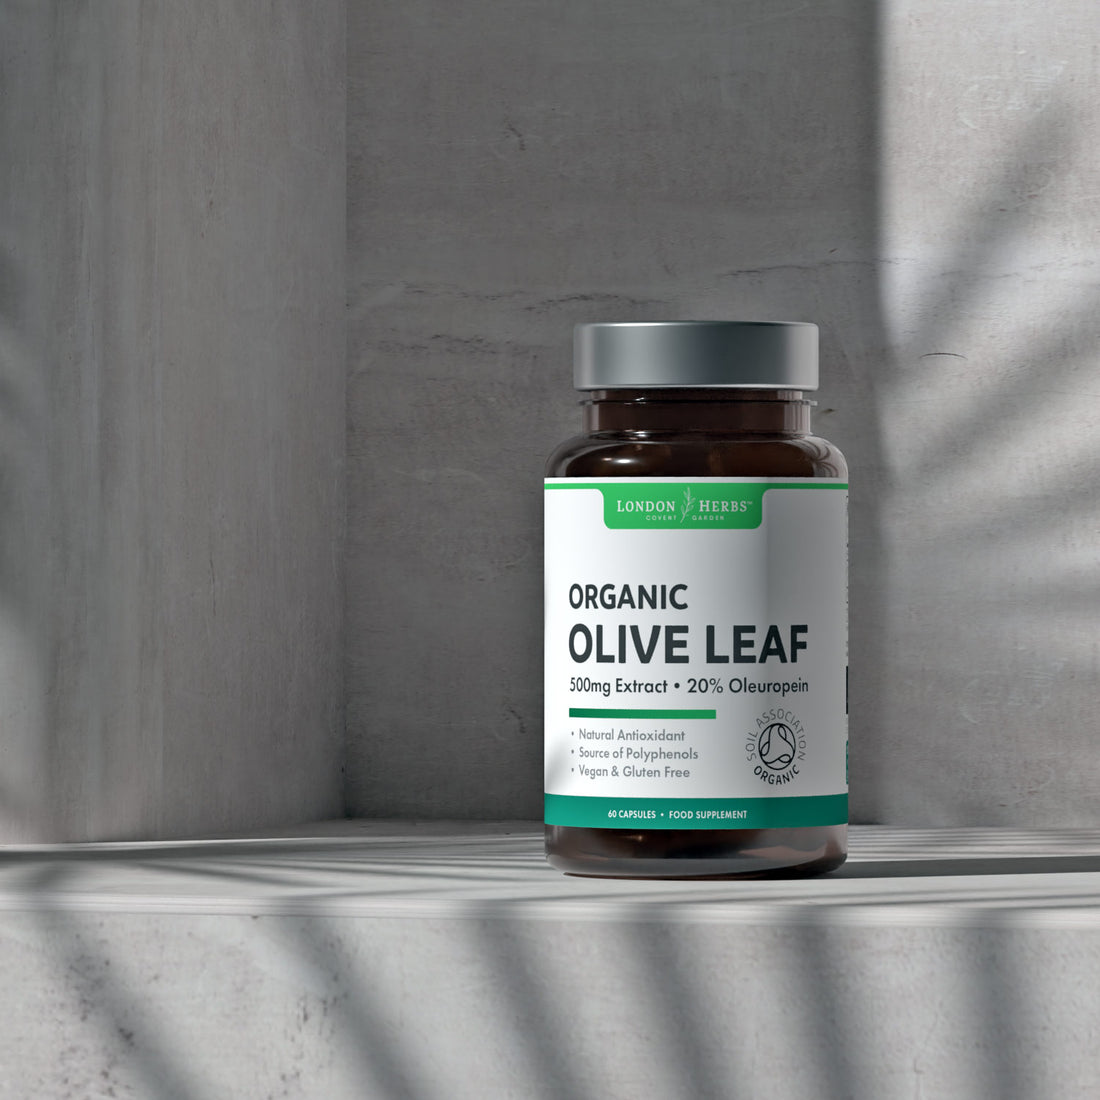 Olive Leaf Extract bottle placed on concrete ledge